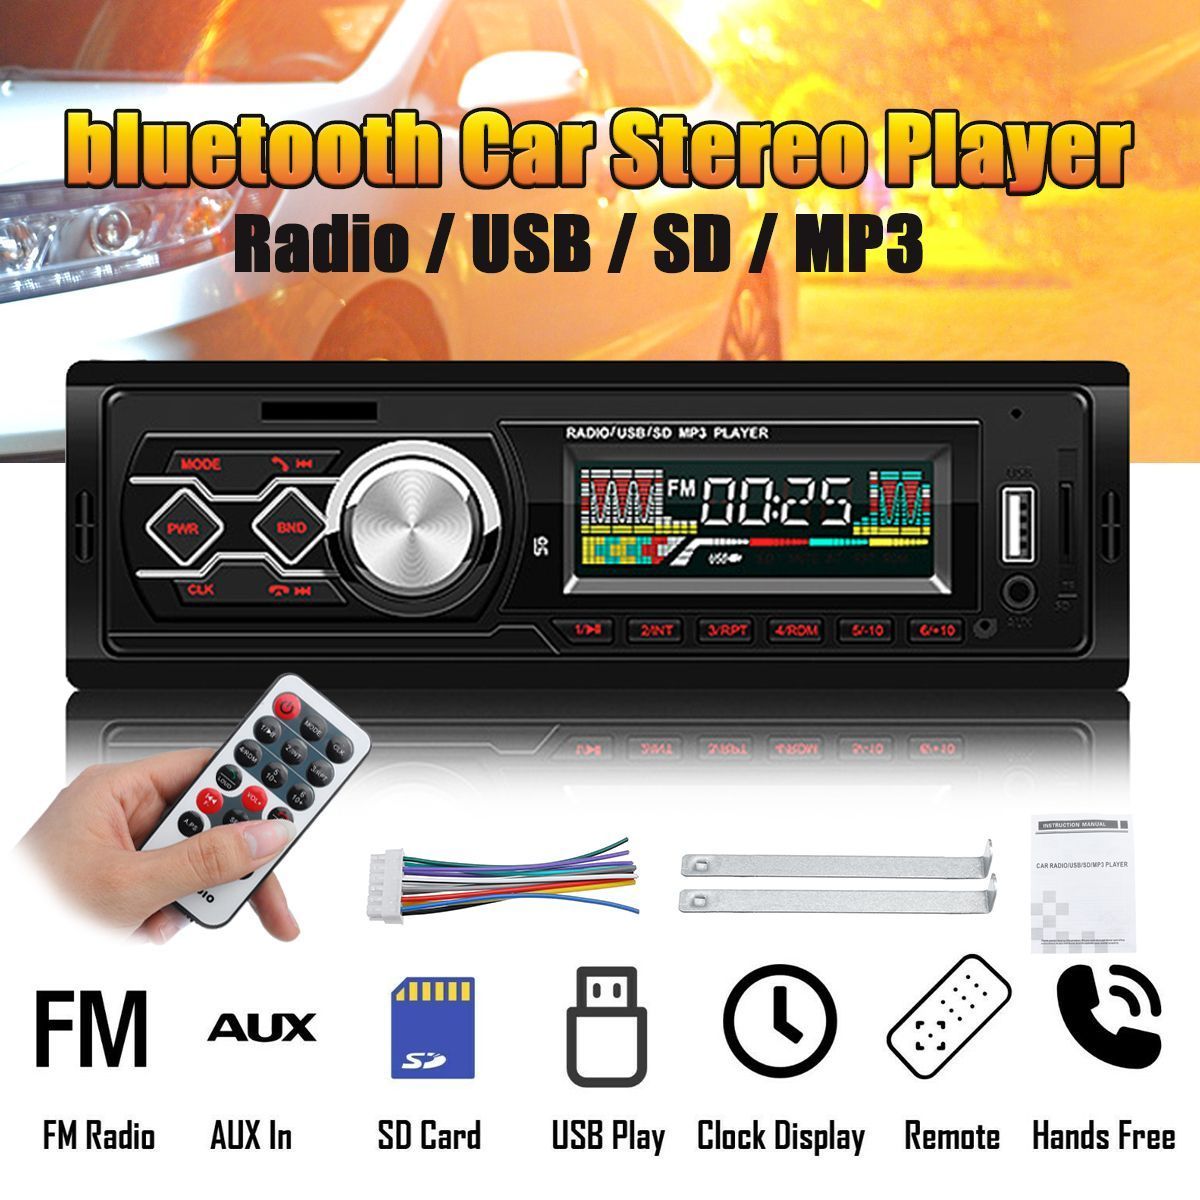 1788-1Din-Wince-Car-Radio-Stereo-Head-Unit-MP5-MP3-Player-bluetooth-With-Remote-Control-FM-USB-SD-AU-1628625